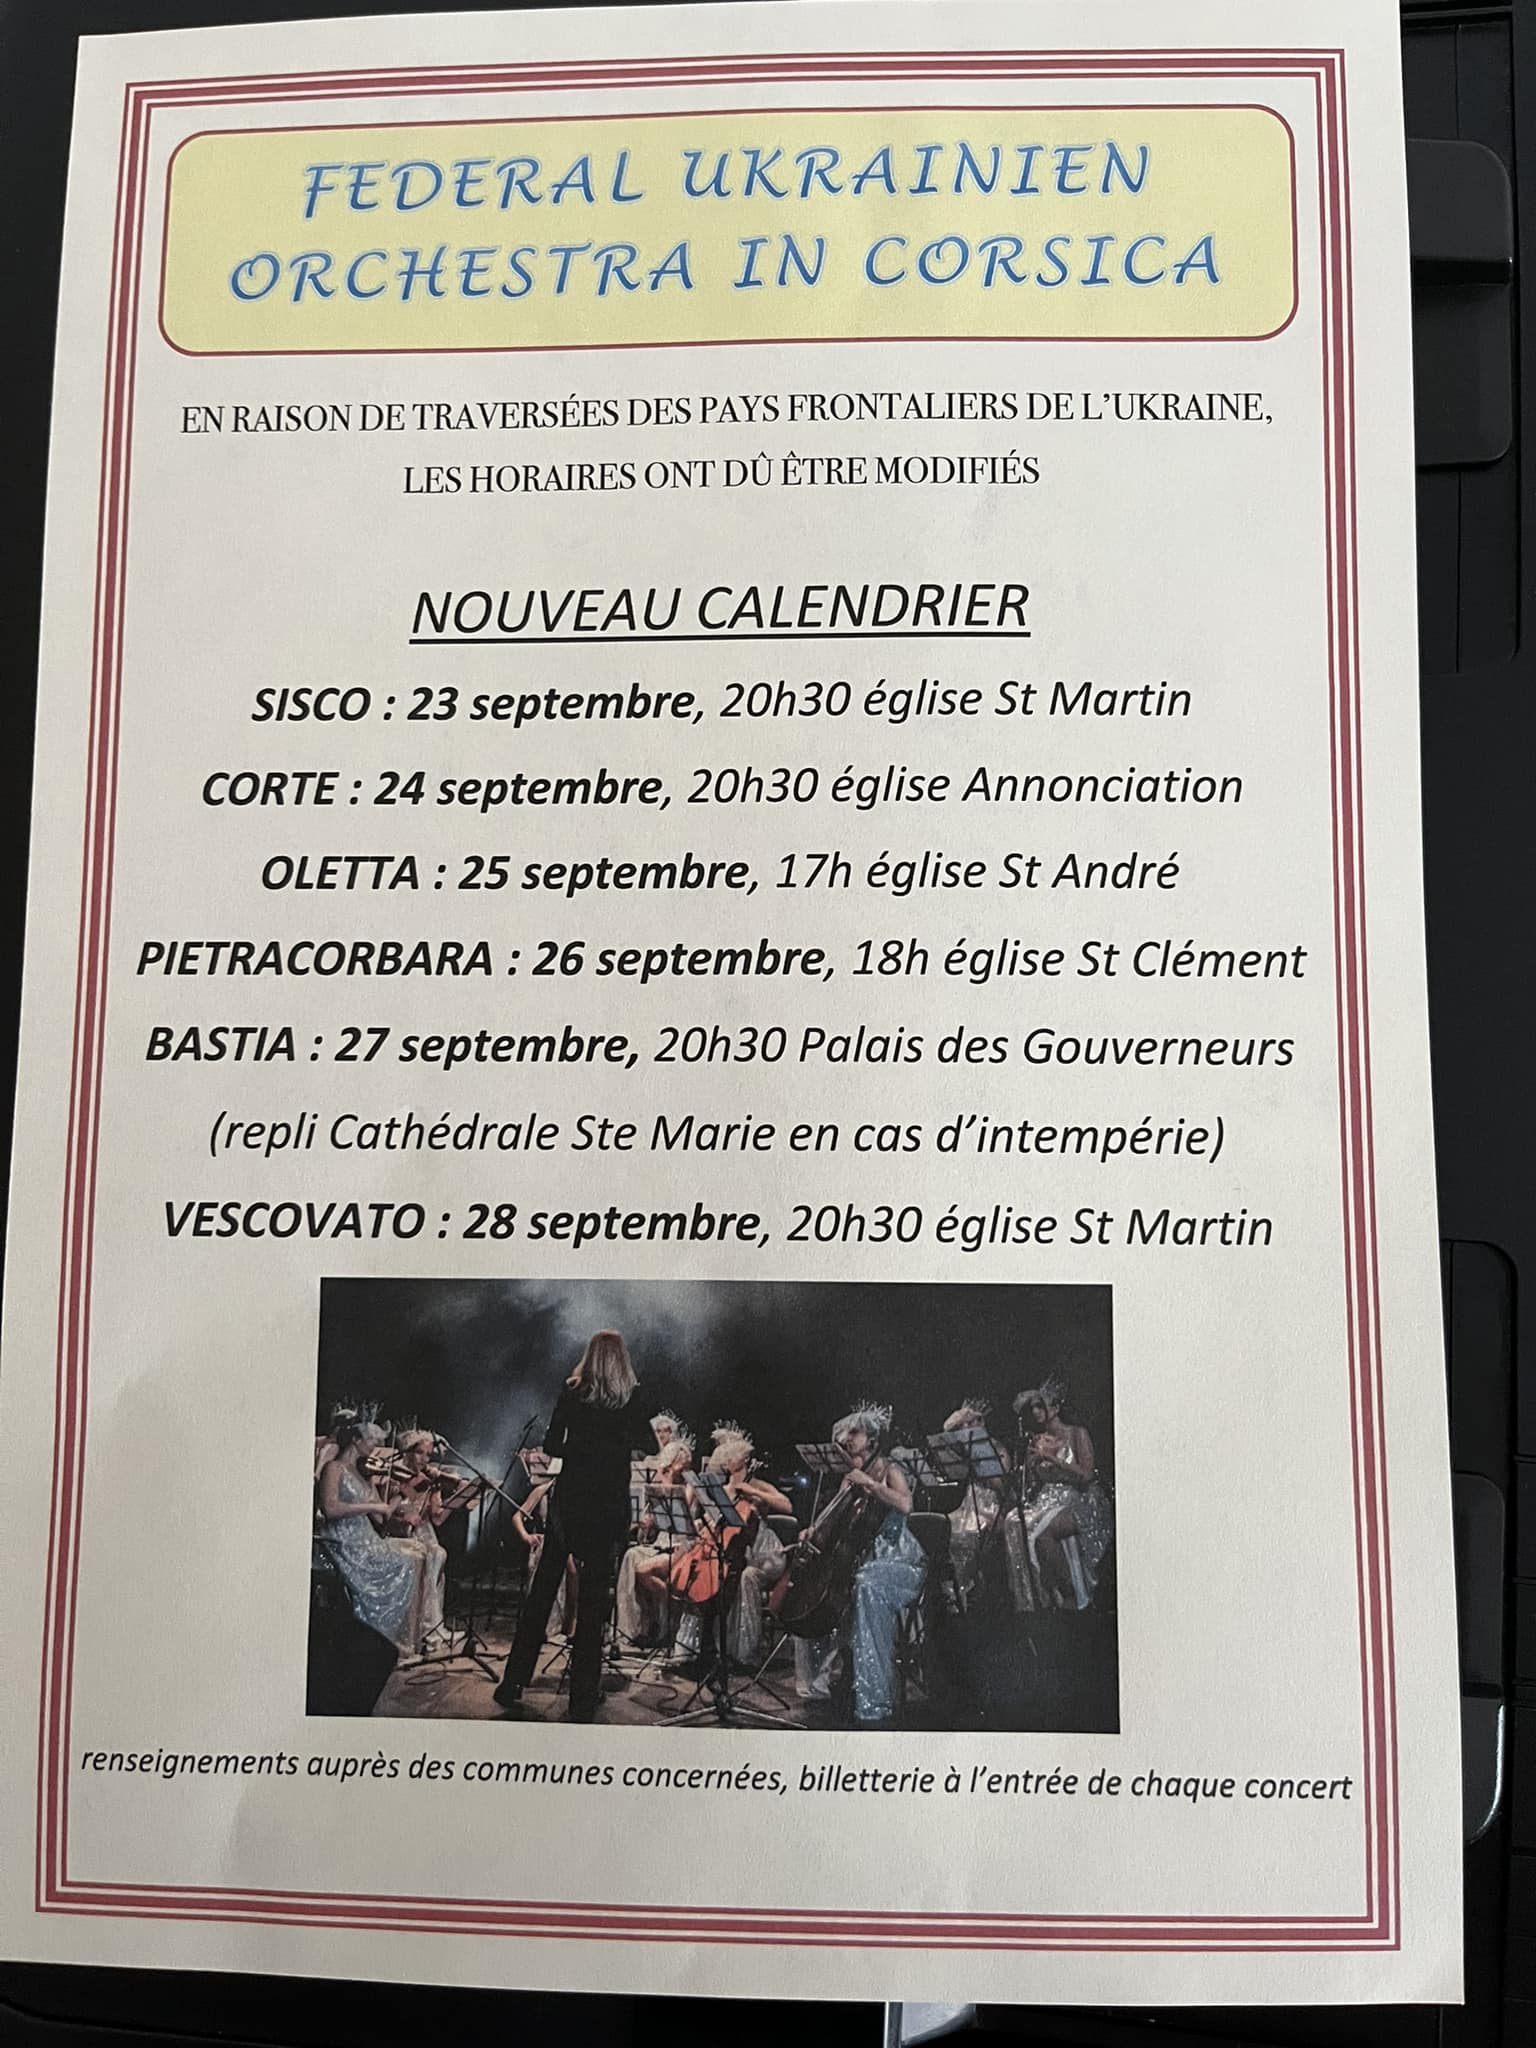 images/Federal_Ukrainien_orchestra_in_Corsica.jpg